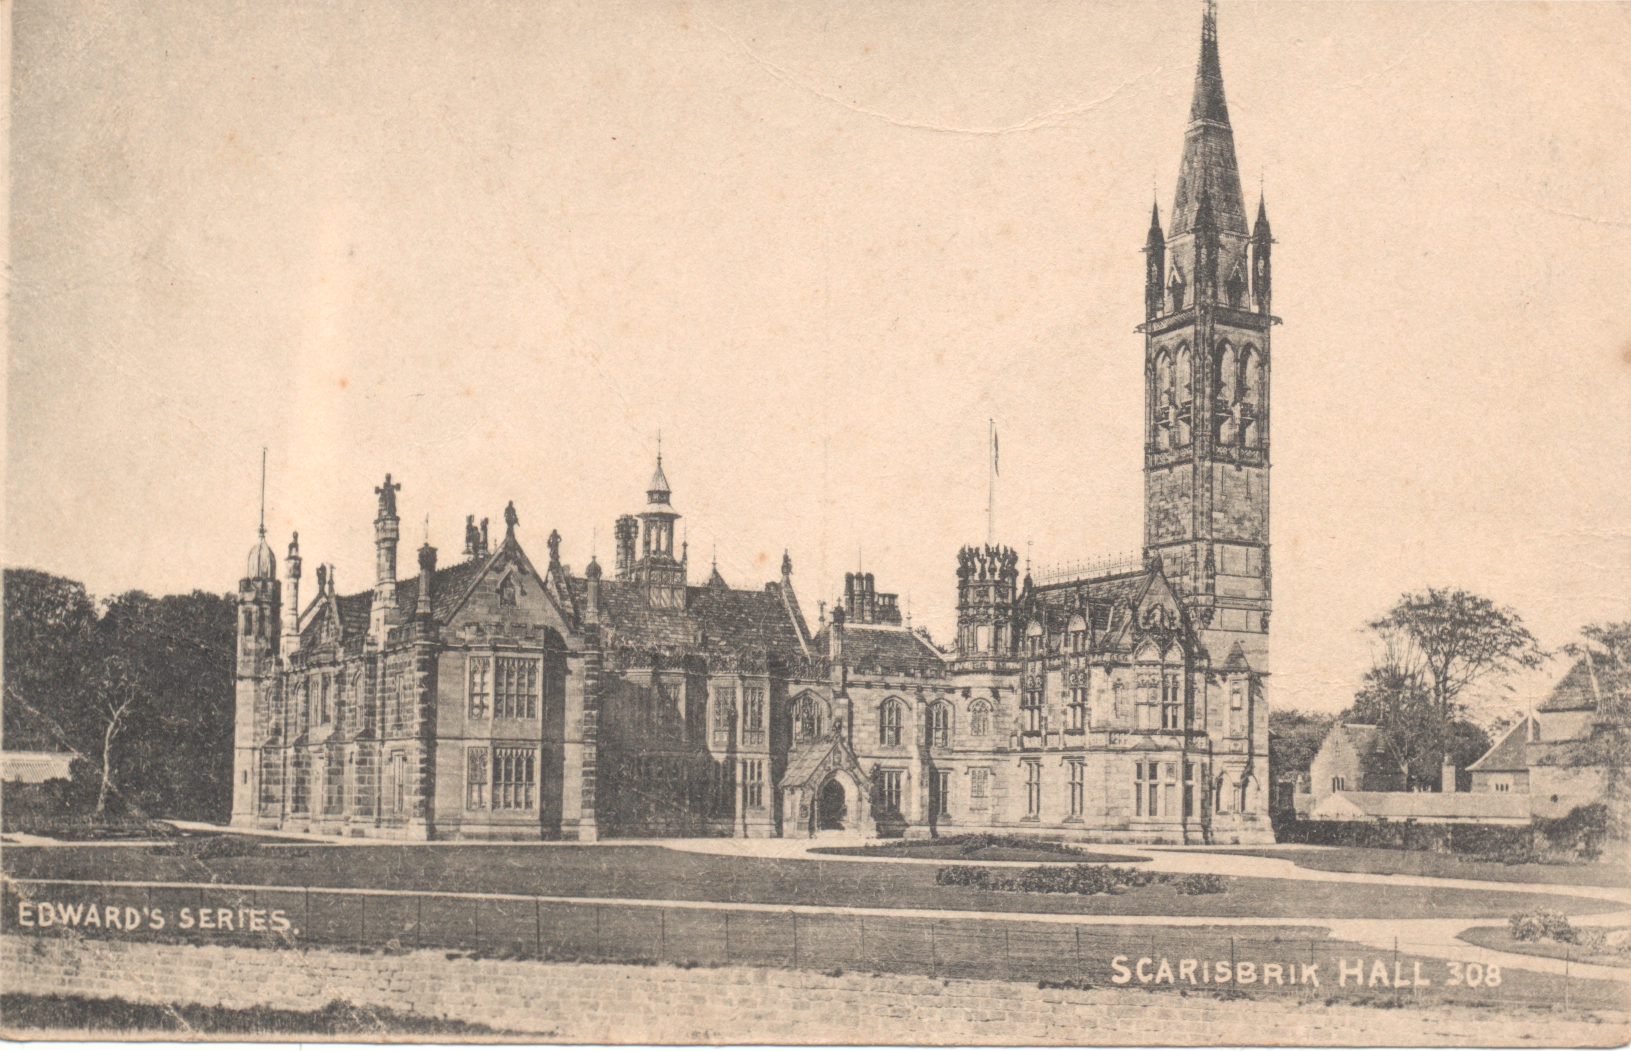 Scarisbrook Hall